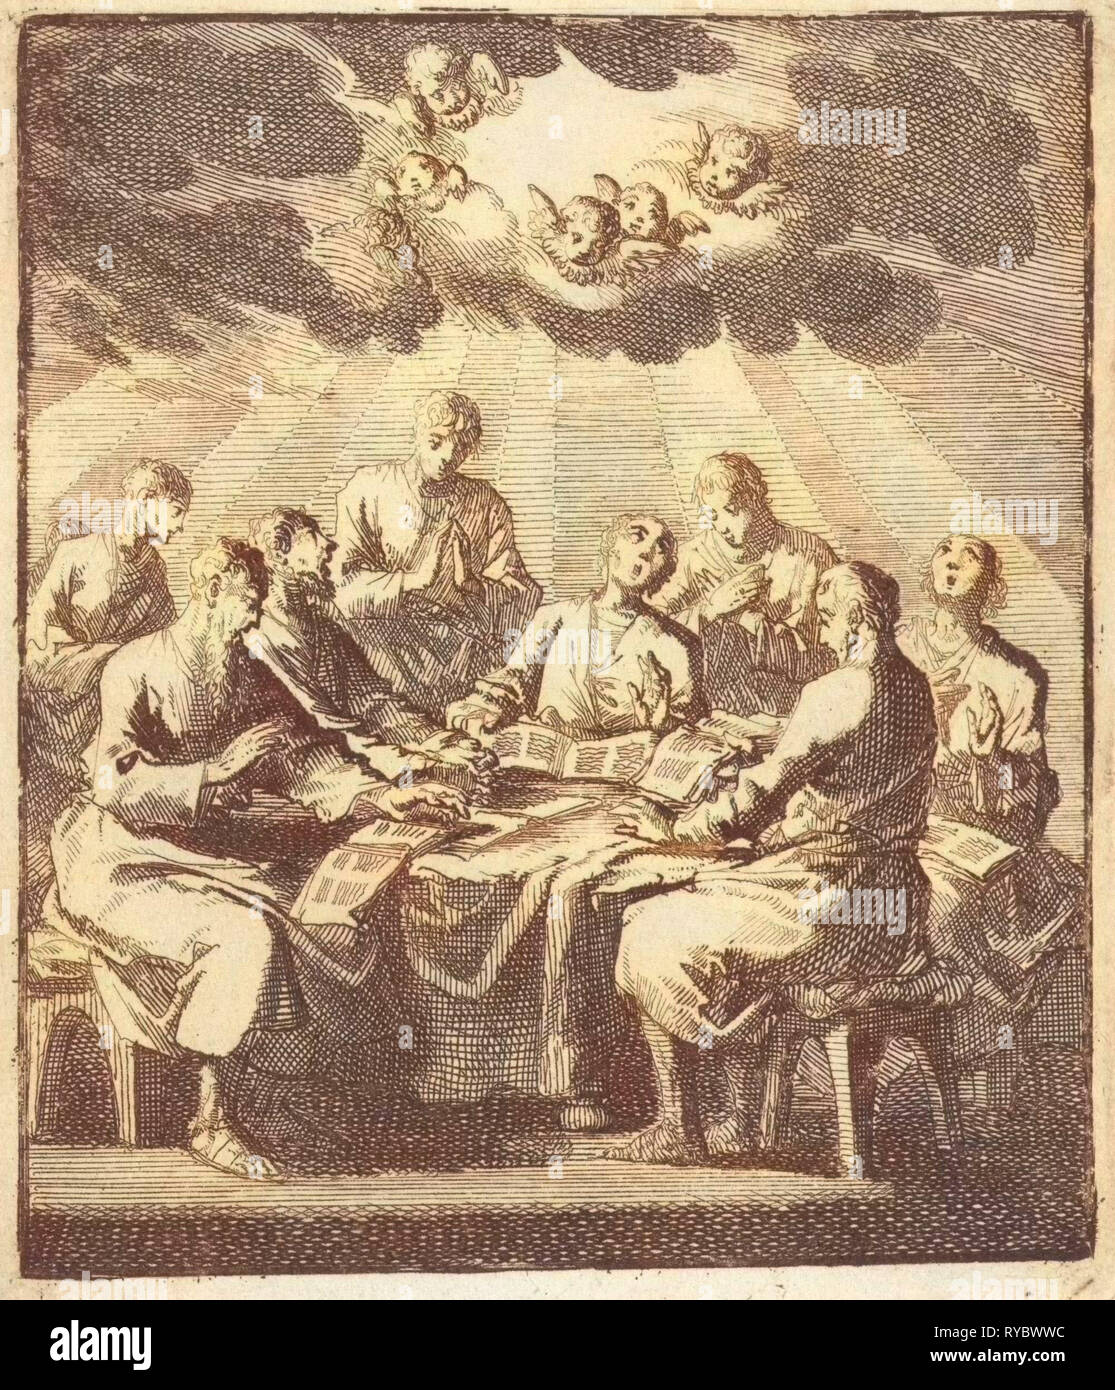 Eight men singing around a table, Jan Luyken, Jan Huygen, Jacobus van Hardenberg, 1700 Stock Photo